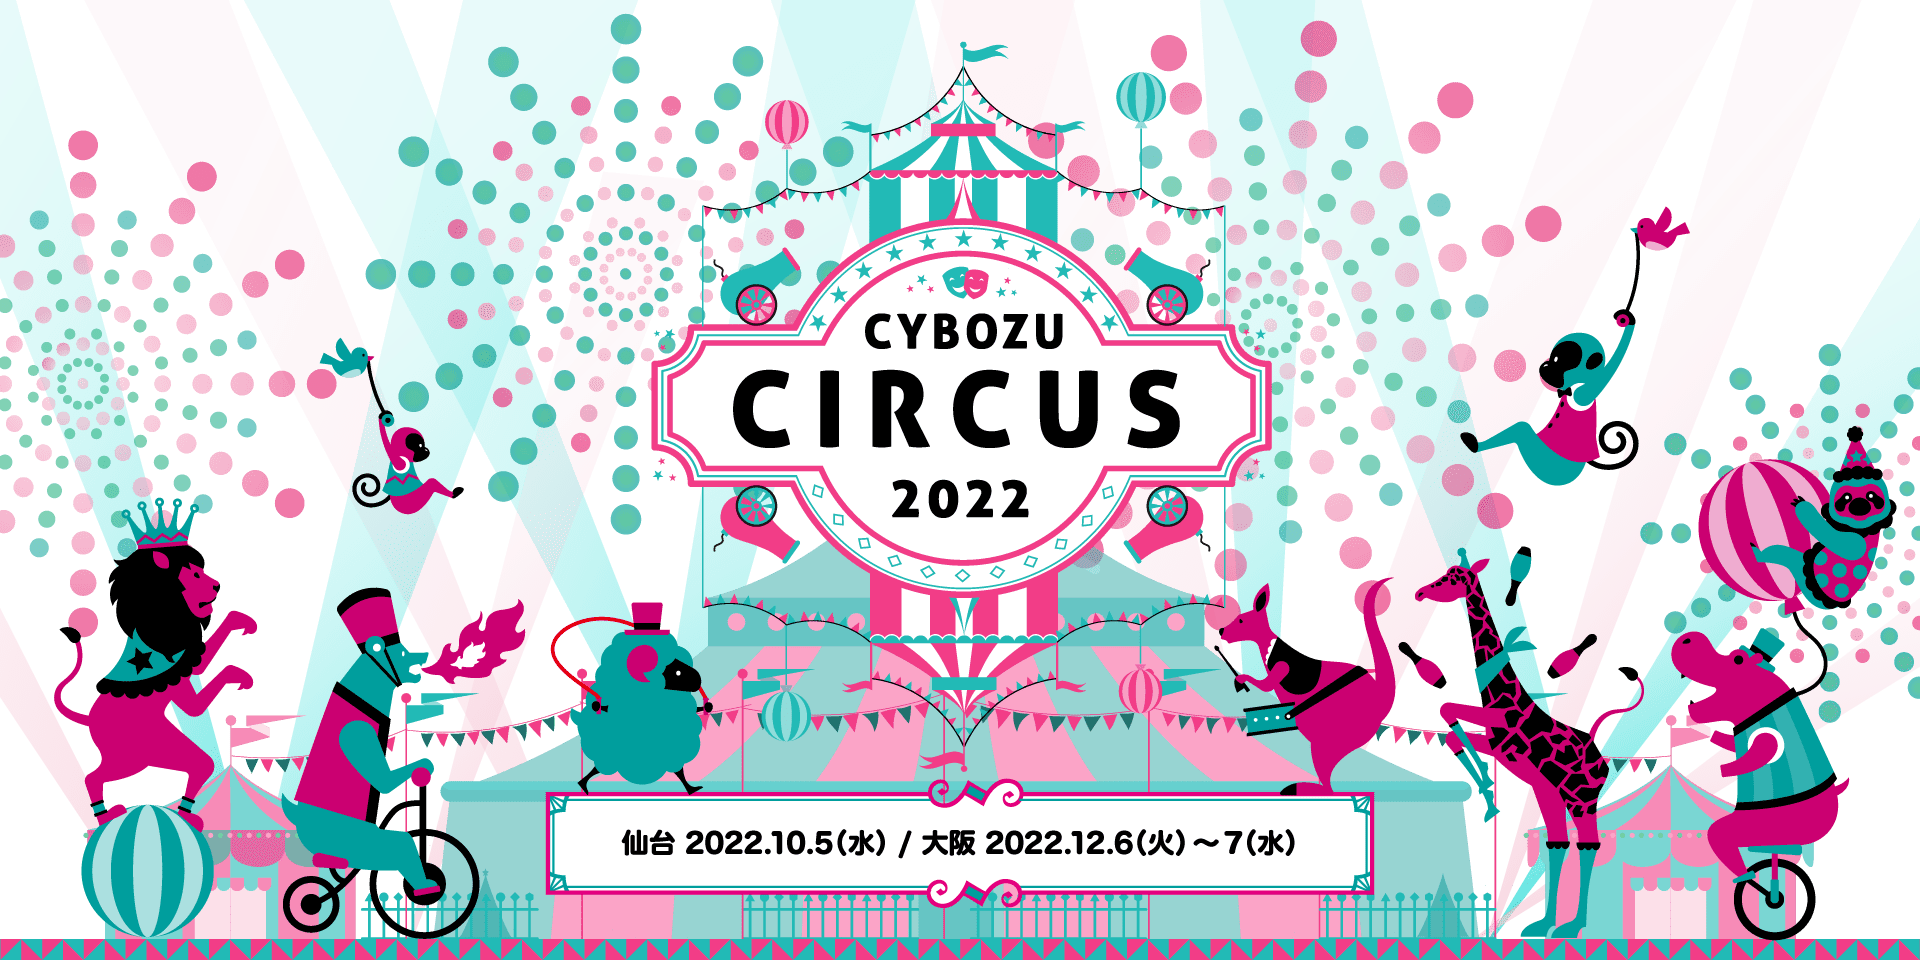 Cybozu Circus 2022